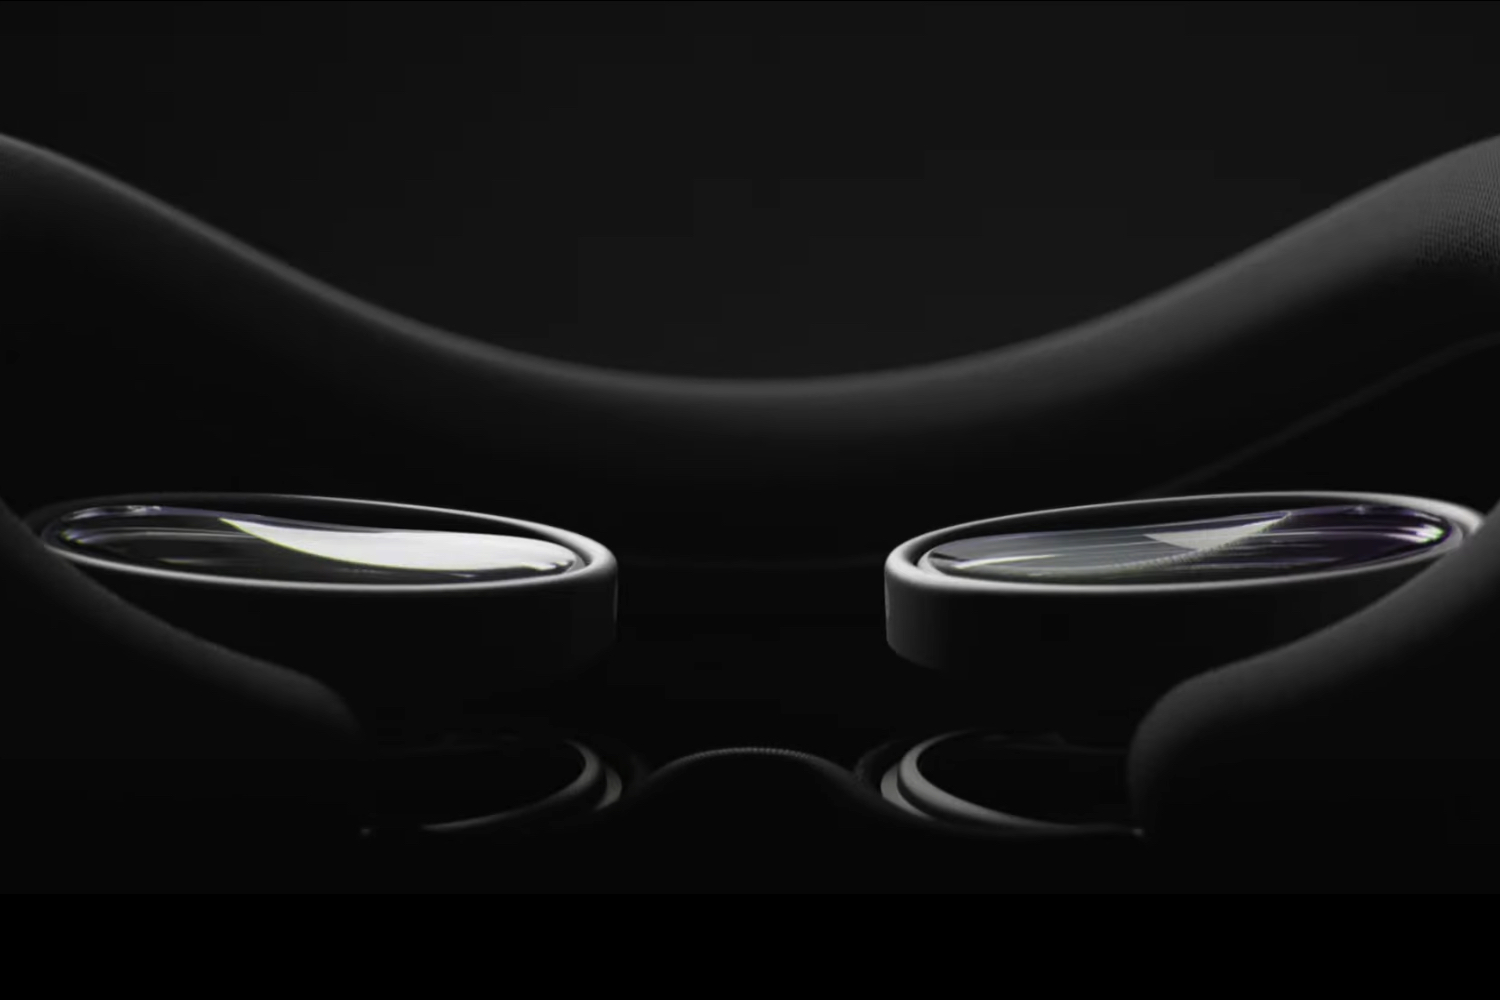 Lentes Zeiss dentro do fone de ouvido Apple Vision Pro.